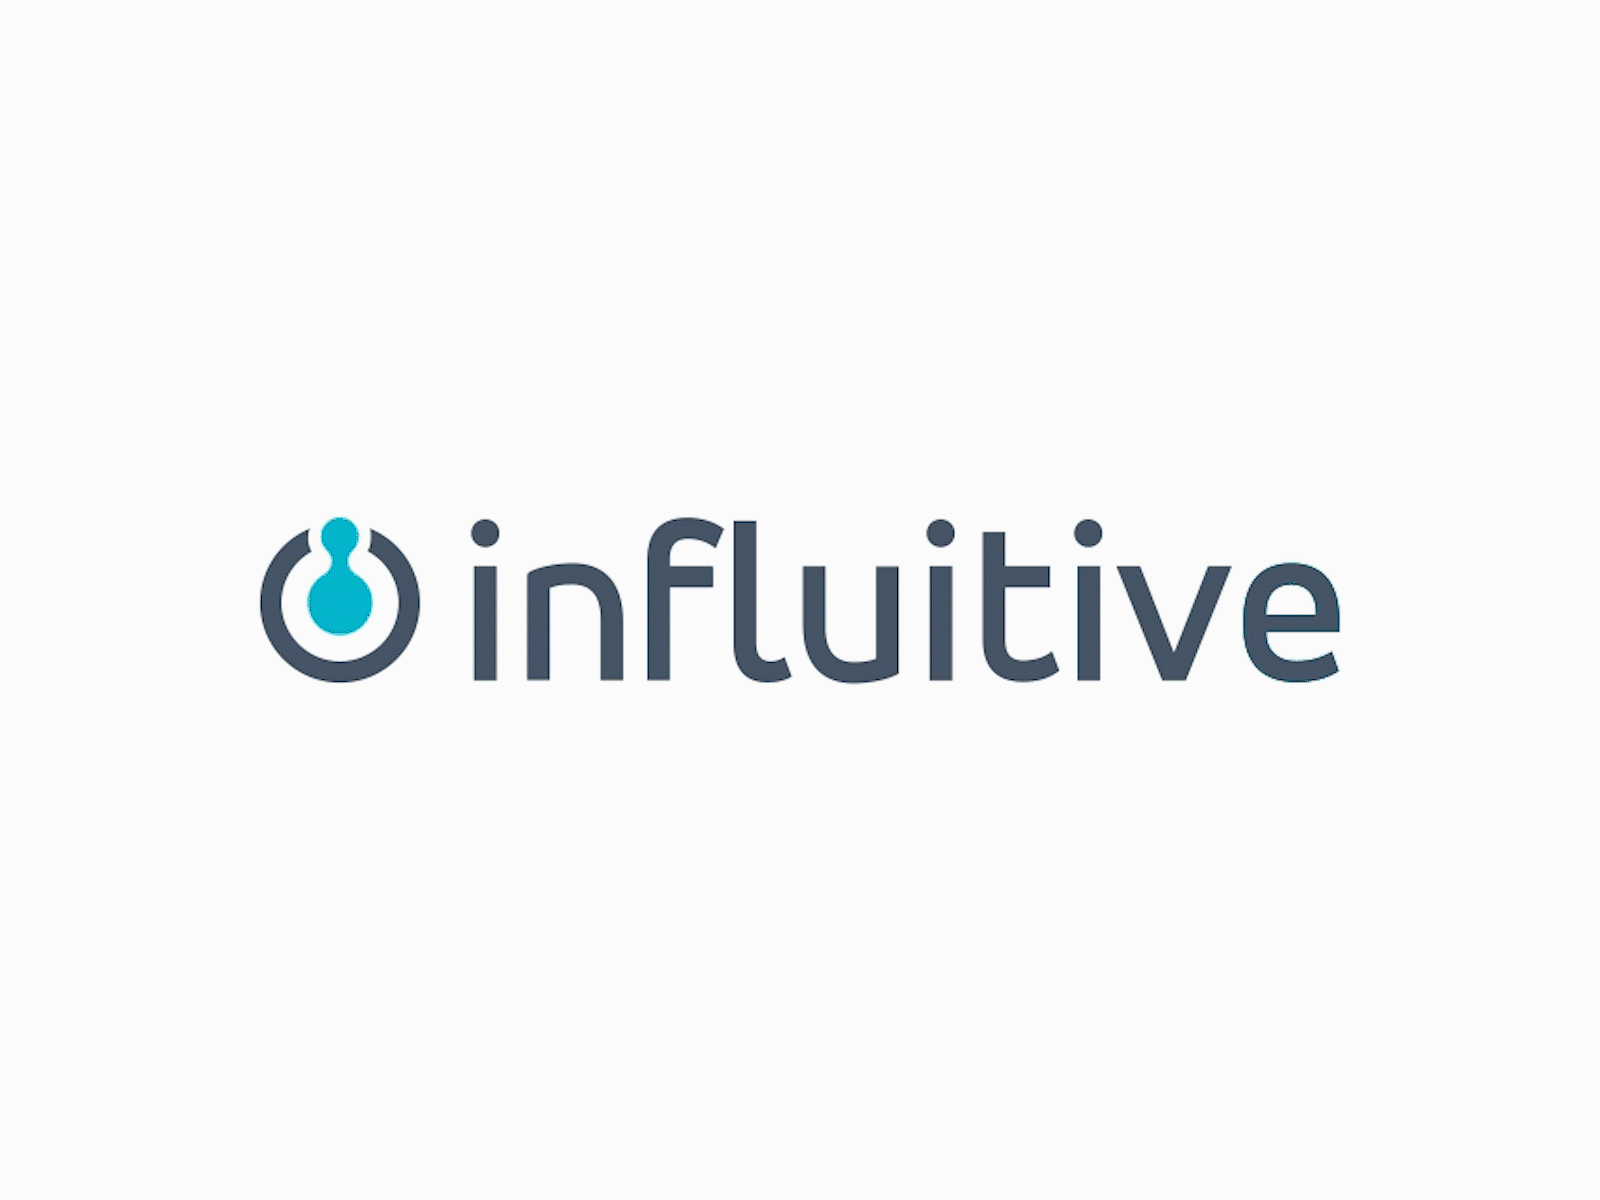 Animated Influitive logo